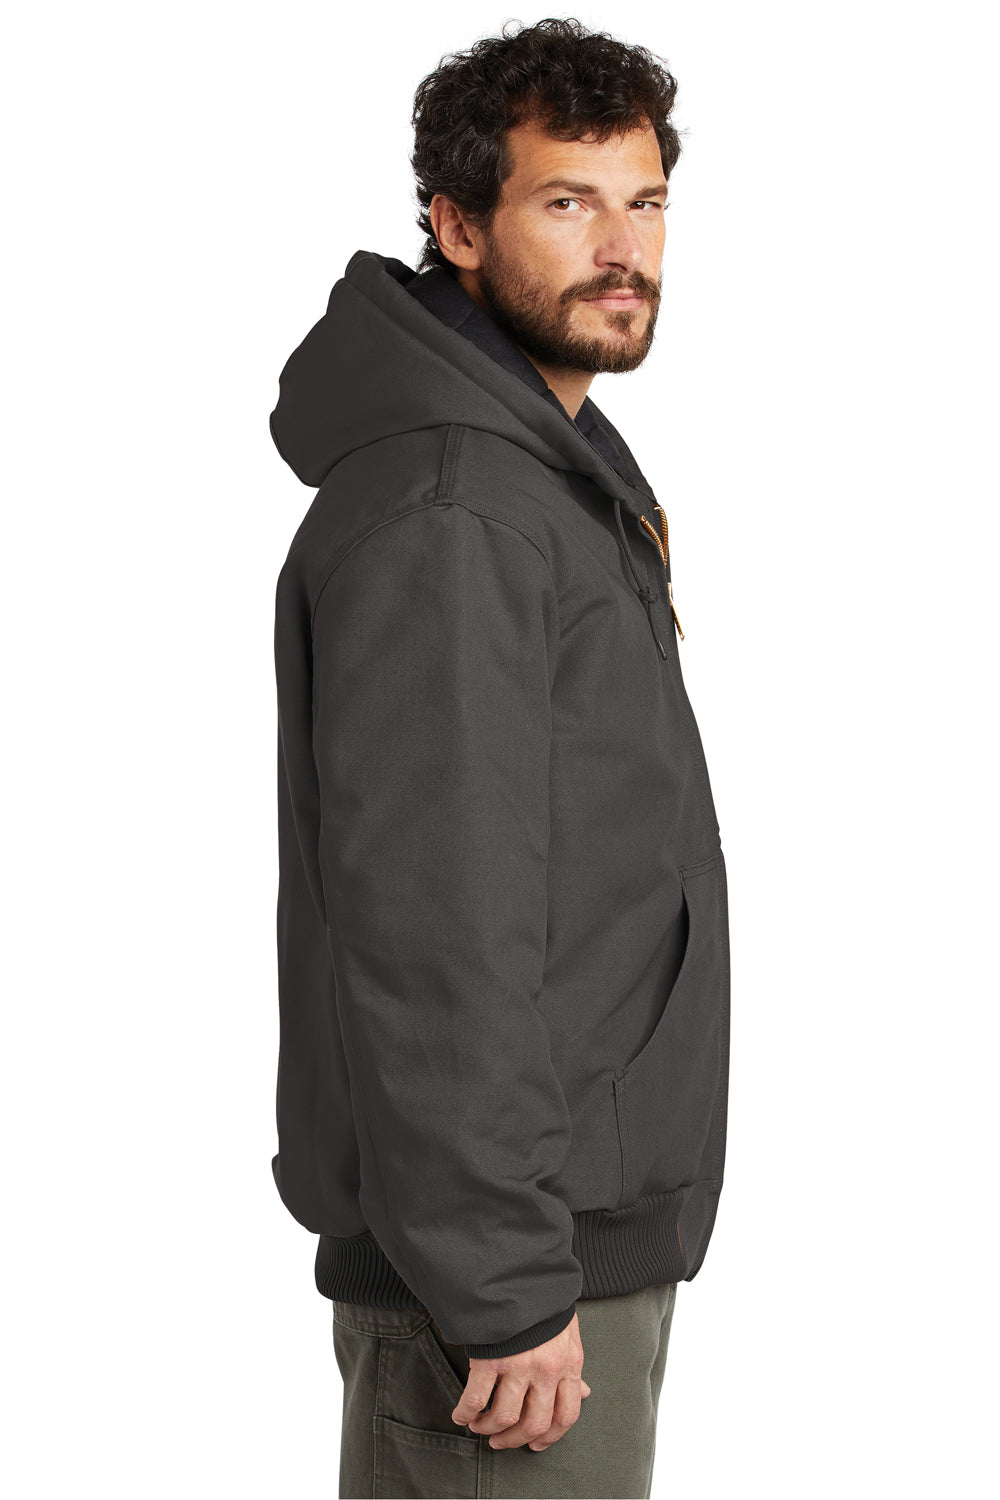 Carhartt CTSJ140/CTTSJ140 Mens Wind & Water Resistant Duck Cloth Full Zip Hooded Work Jacket Gravel Grey Model Side